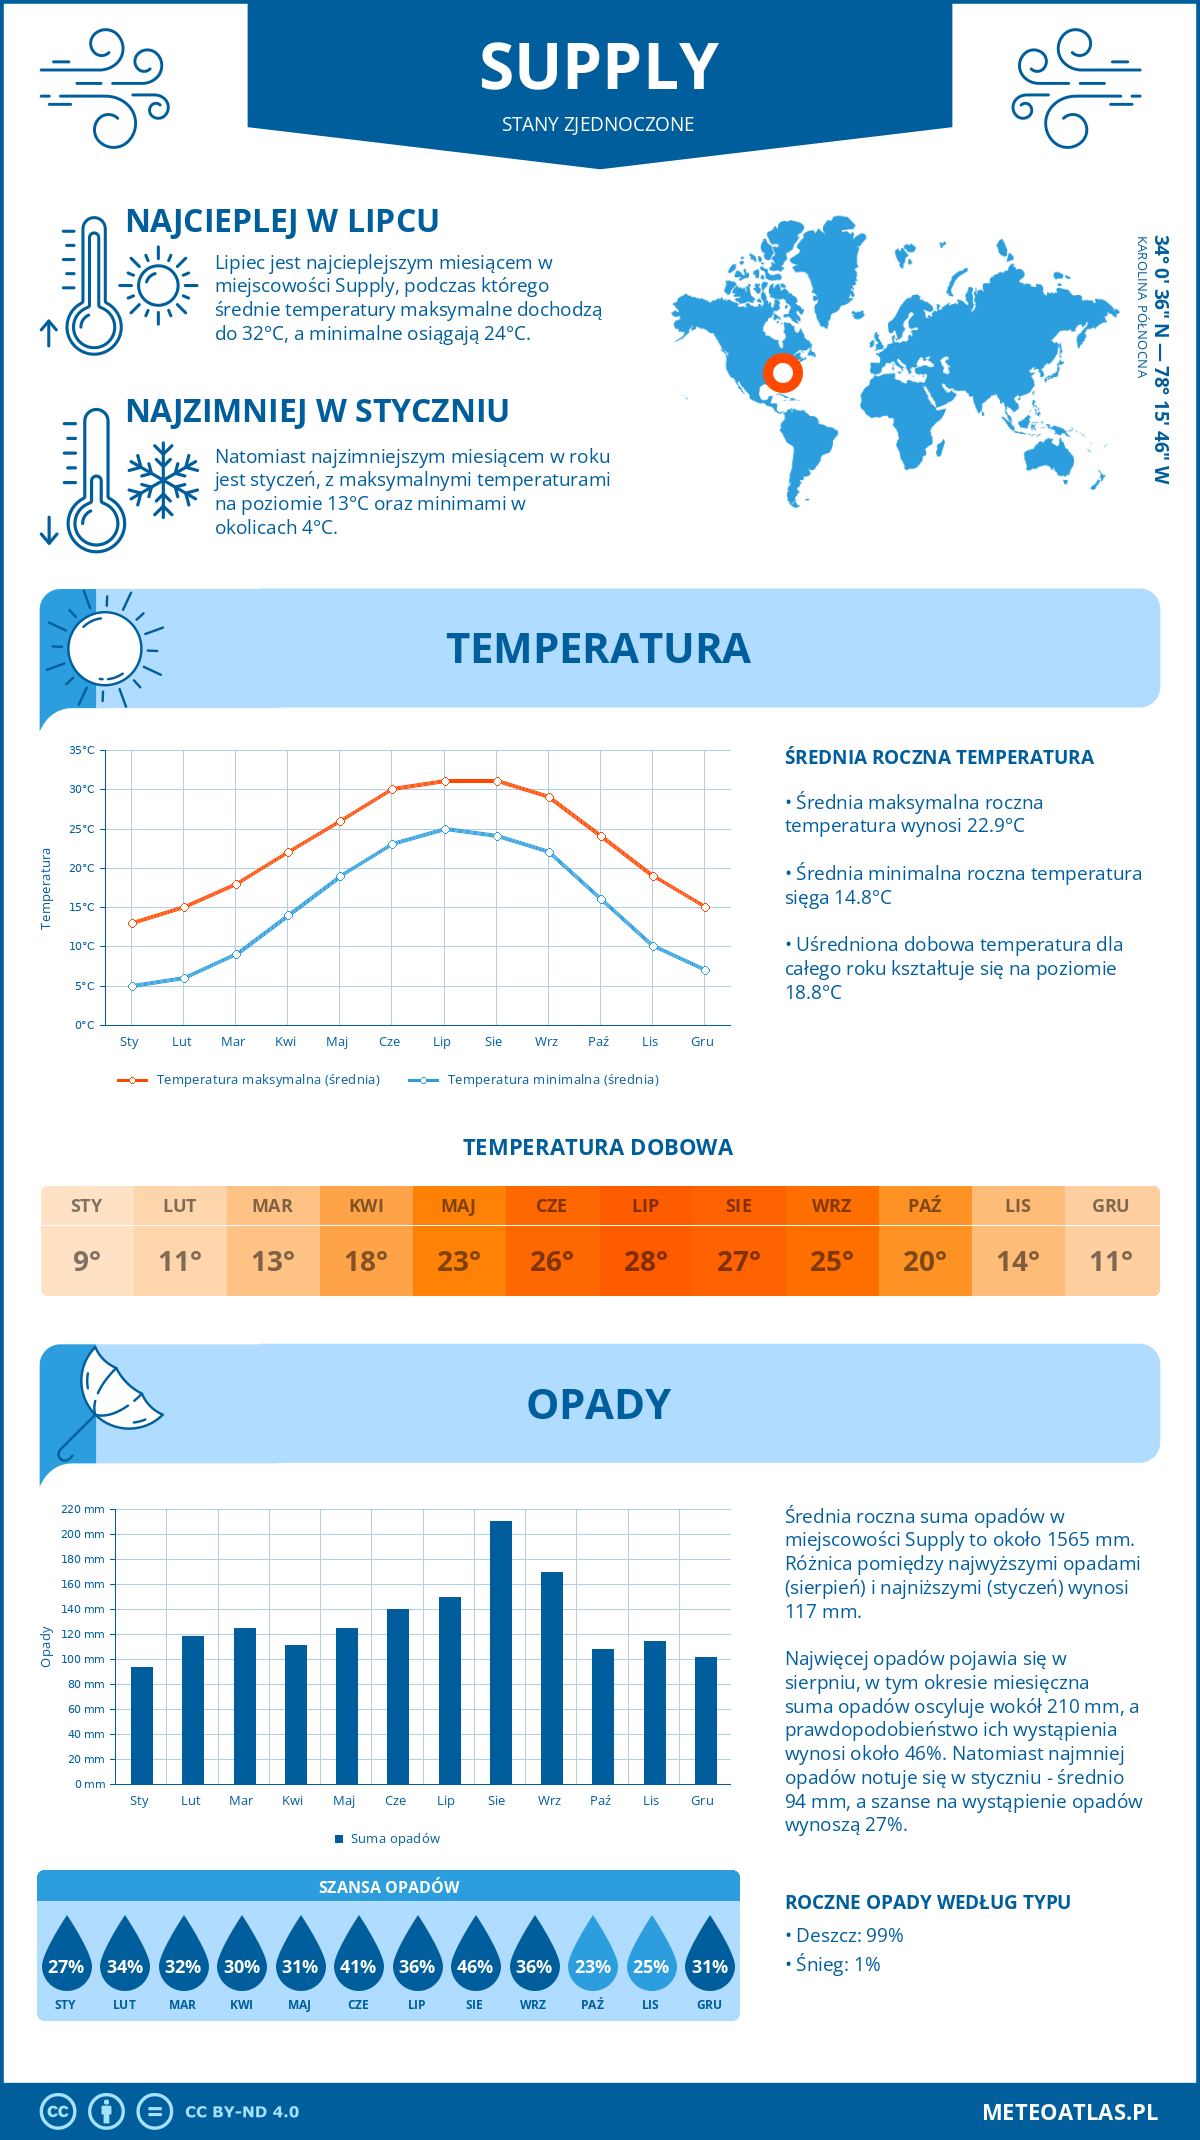 Pogoda Supply (Stany Zjednoczone). Temperatura oraz opady.